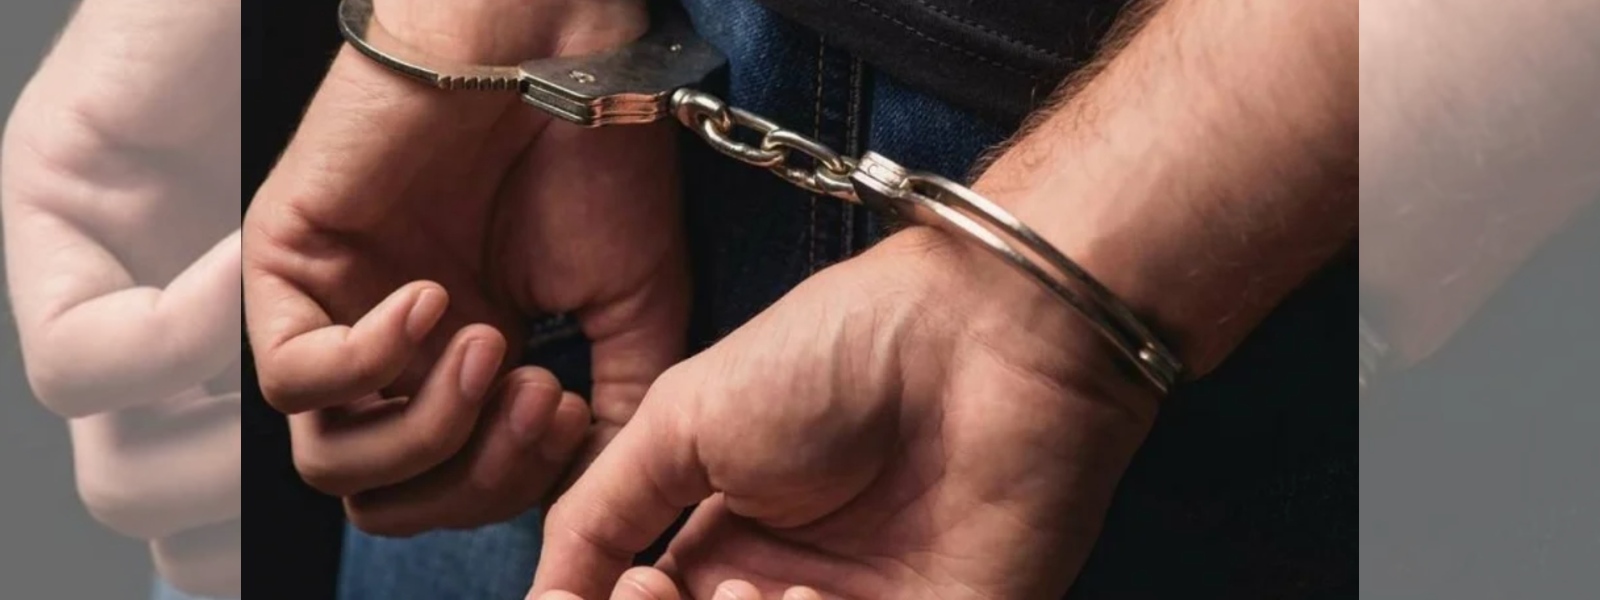 577 persons arrested for violating lockdown regulations